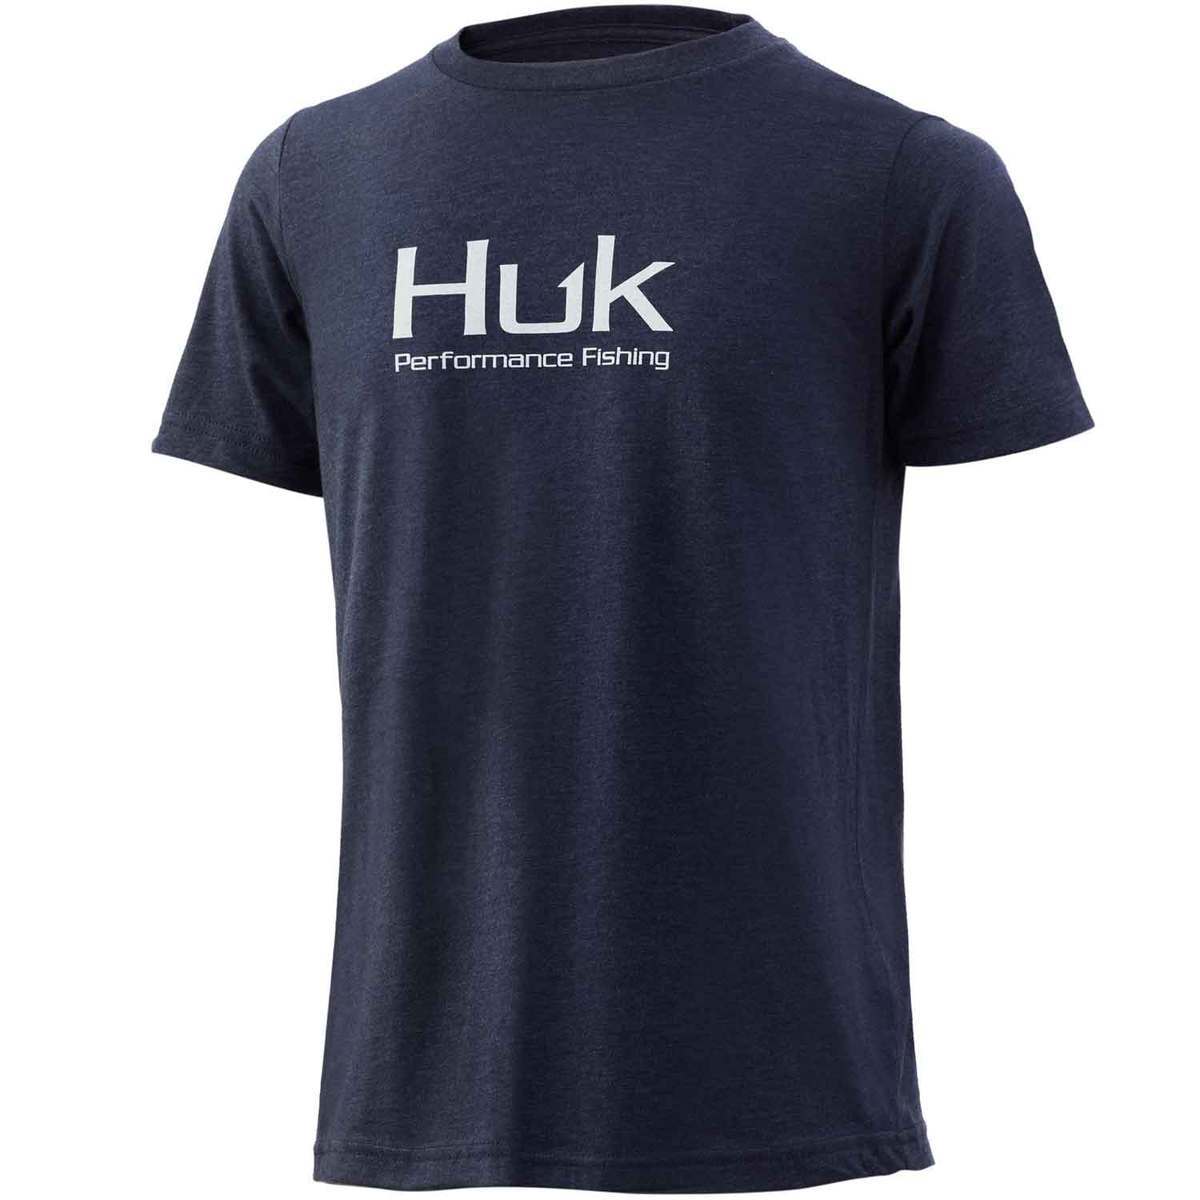 Huk Youth Performance Fishing Short Sleeve Shirt - Sargasso Sea - XS ...